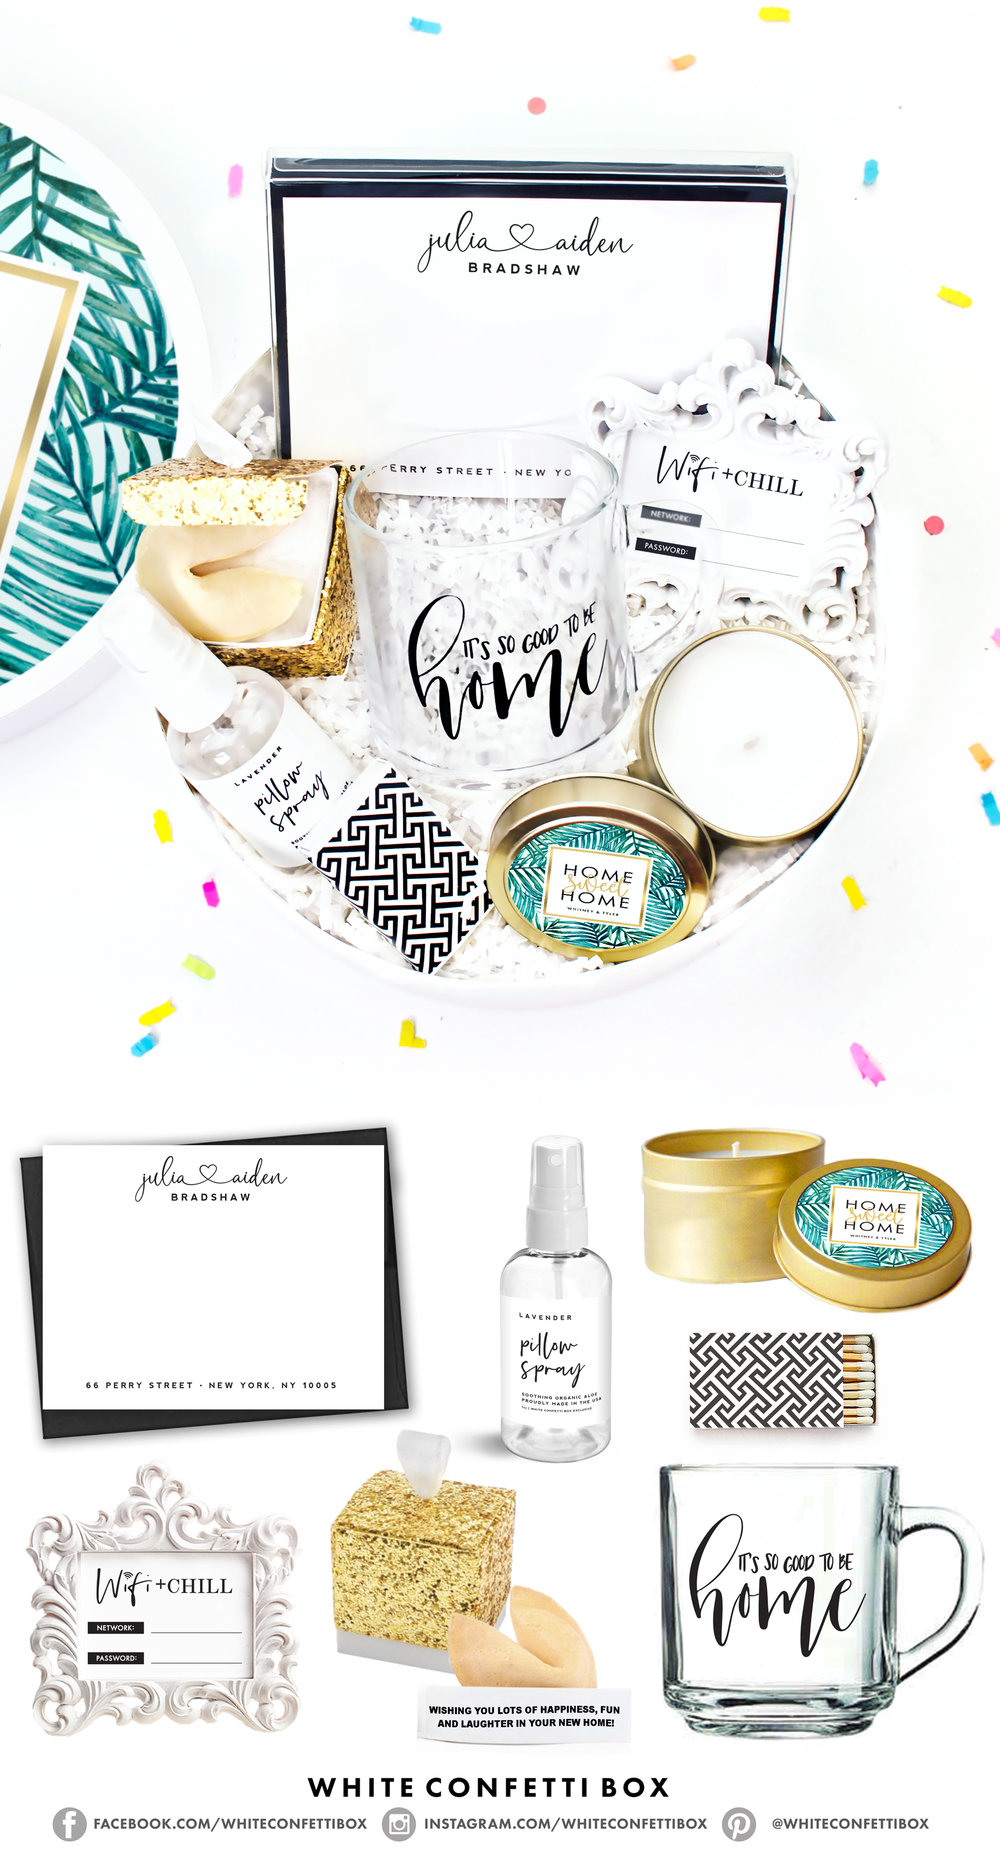 Welcome Home Gift Basket! Coffee gift - Housewarming gift box